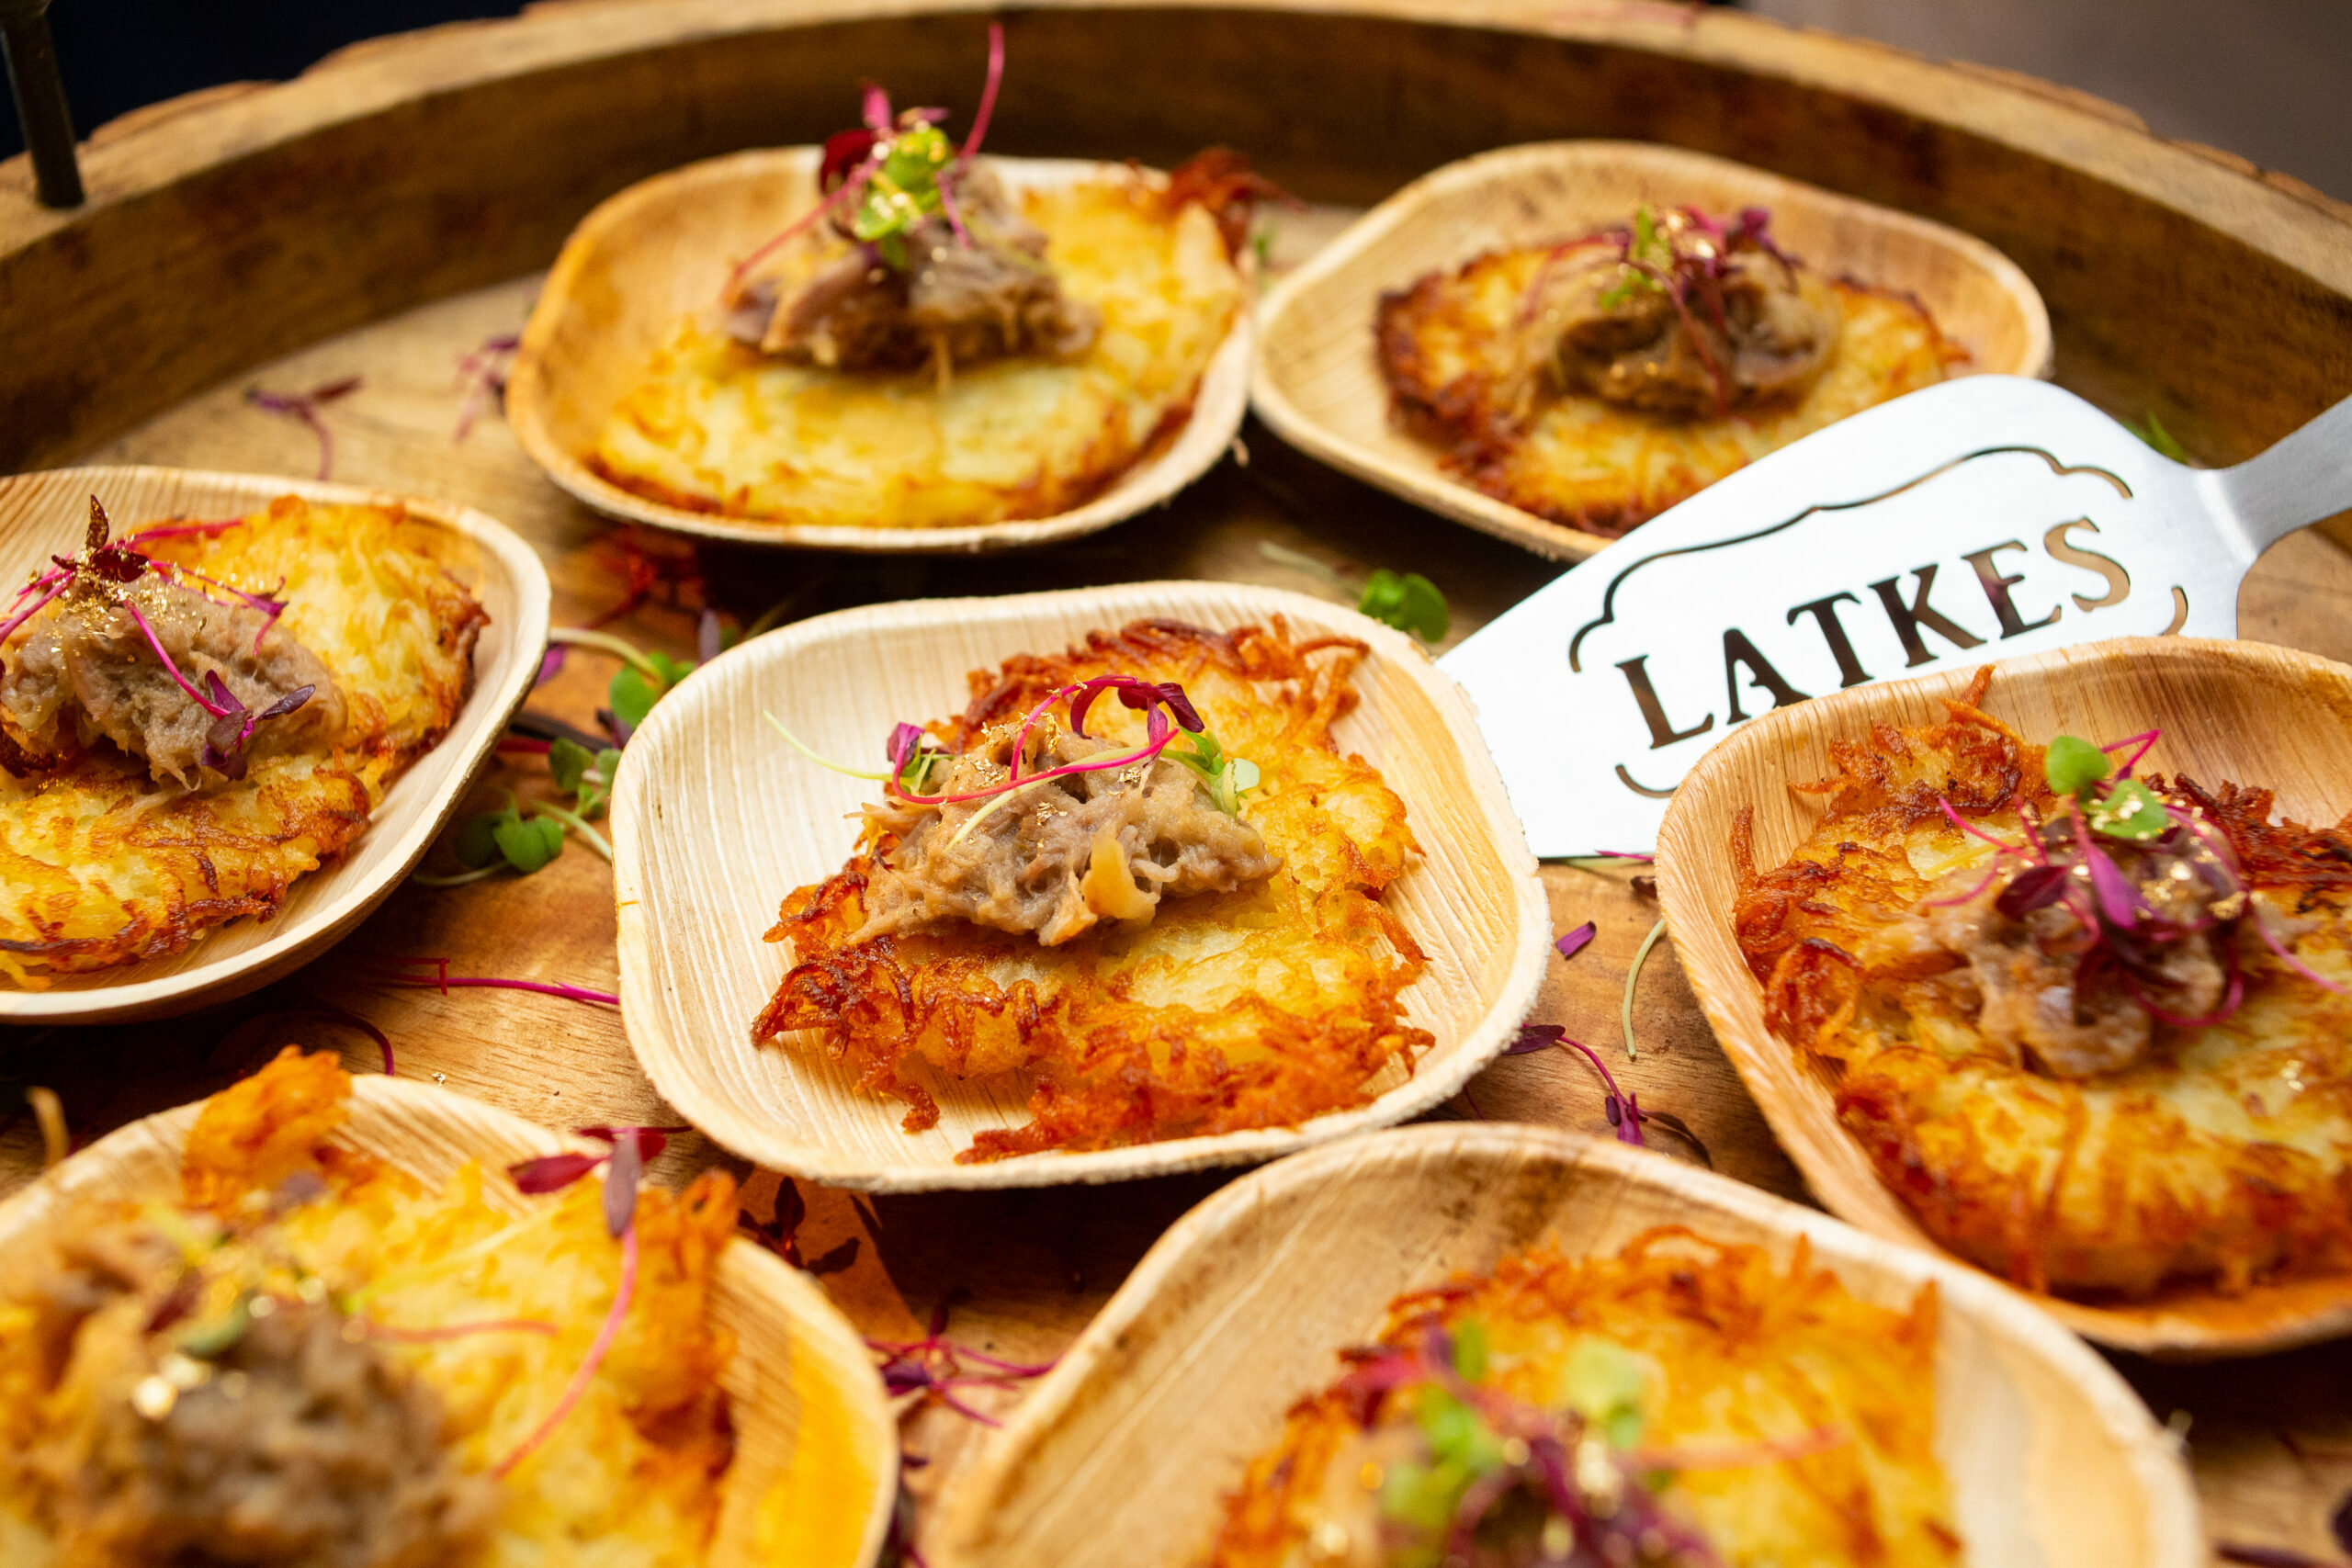 Celebrating Latkes: A Latke Cookbook